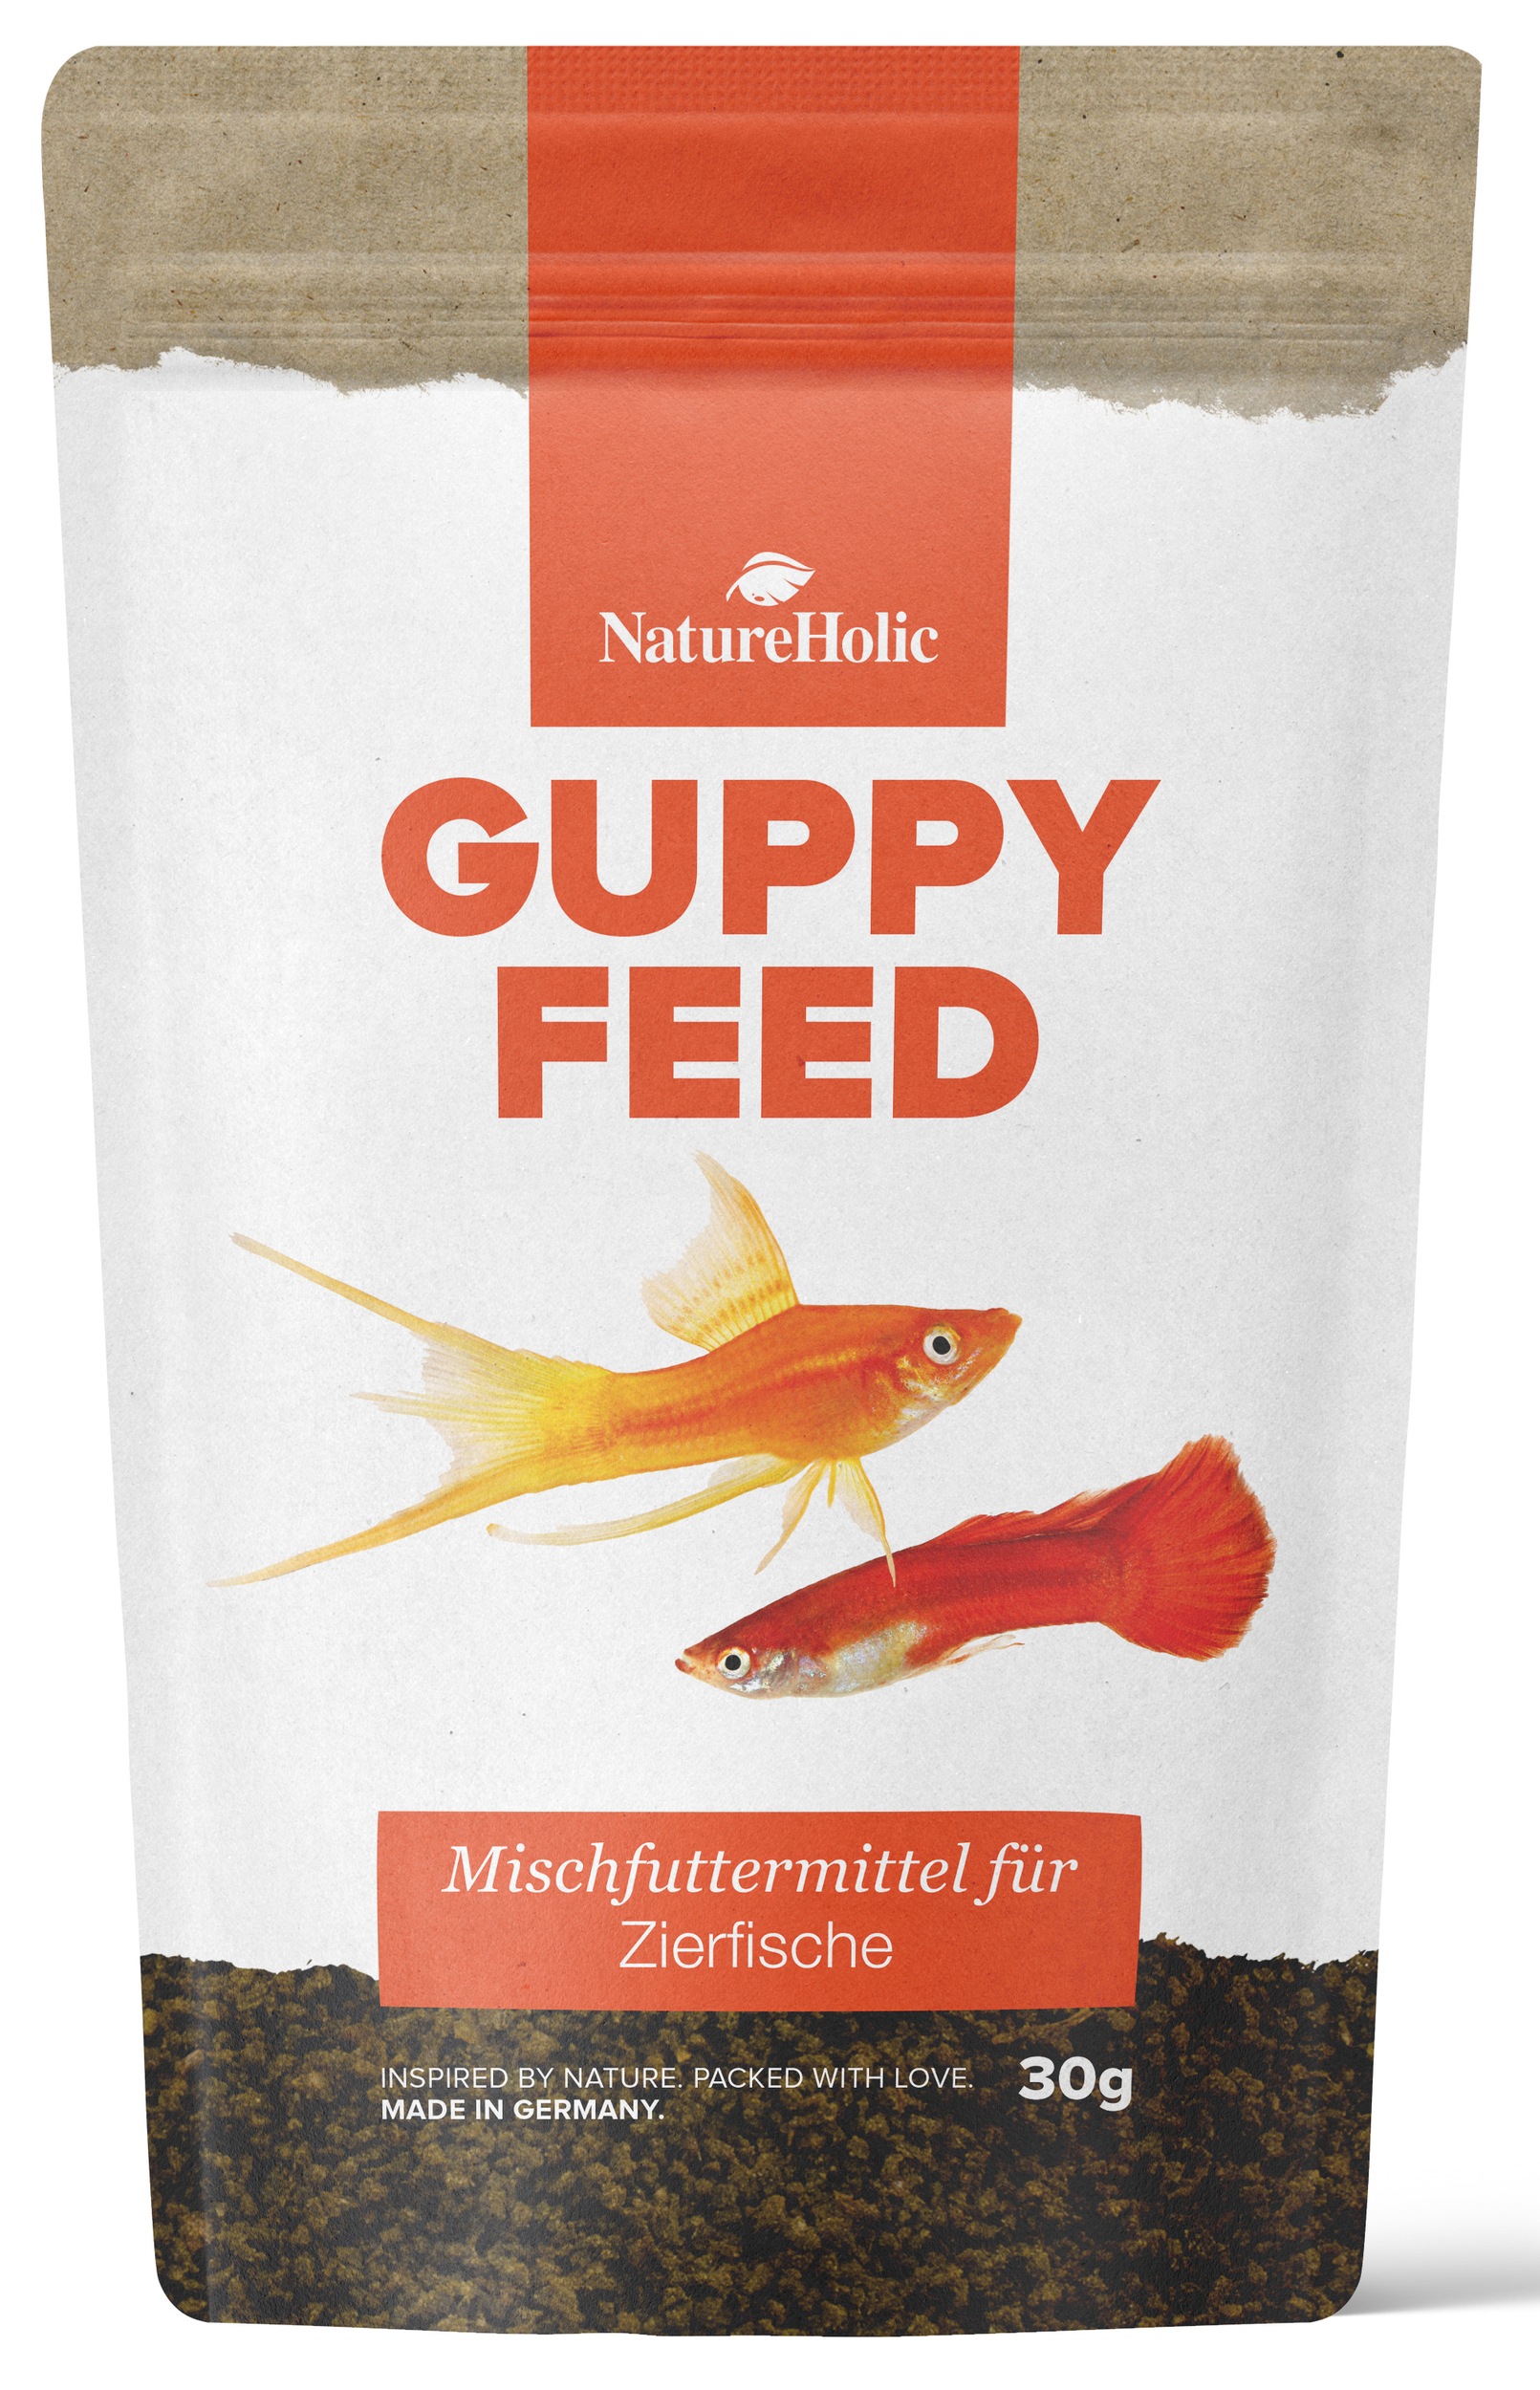 NatureHolic Guppyfeed - Nourriture pour guppys 50ml